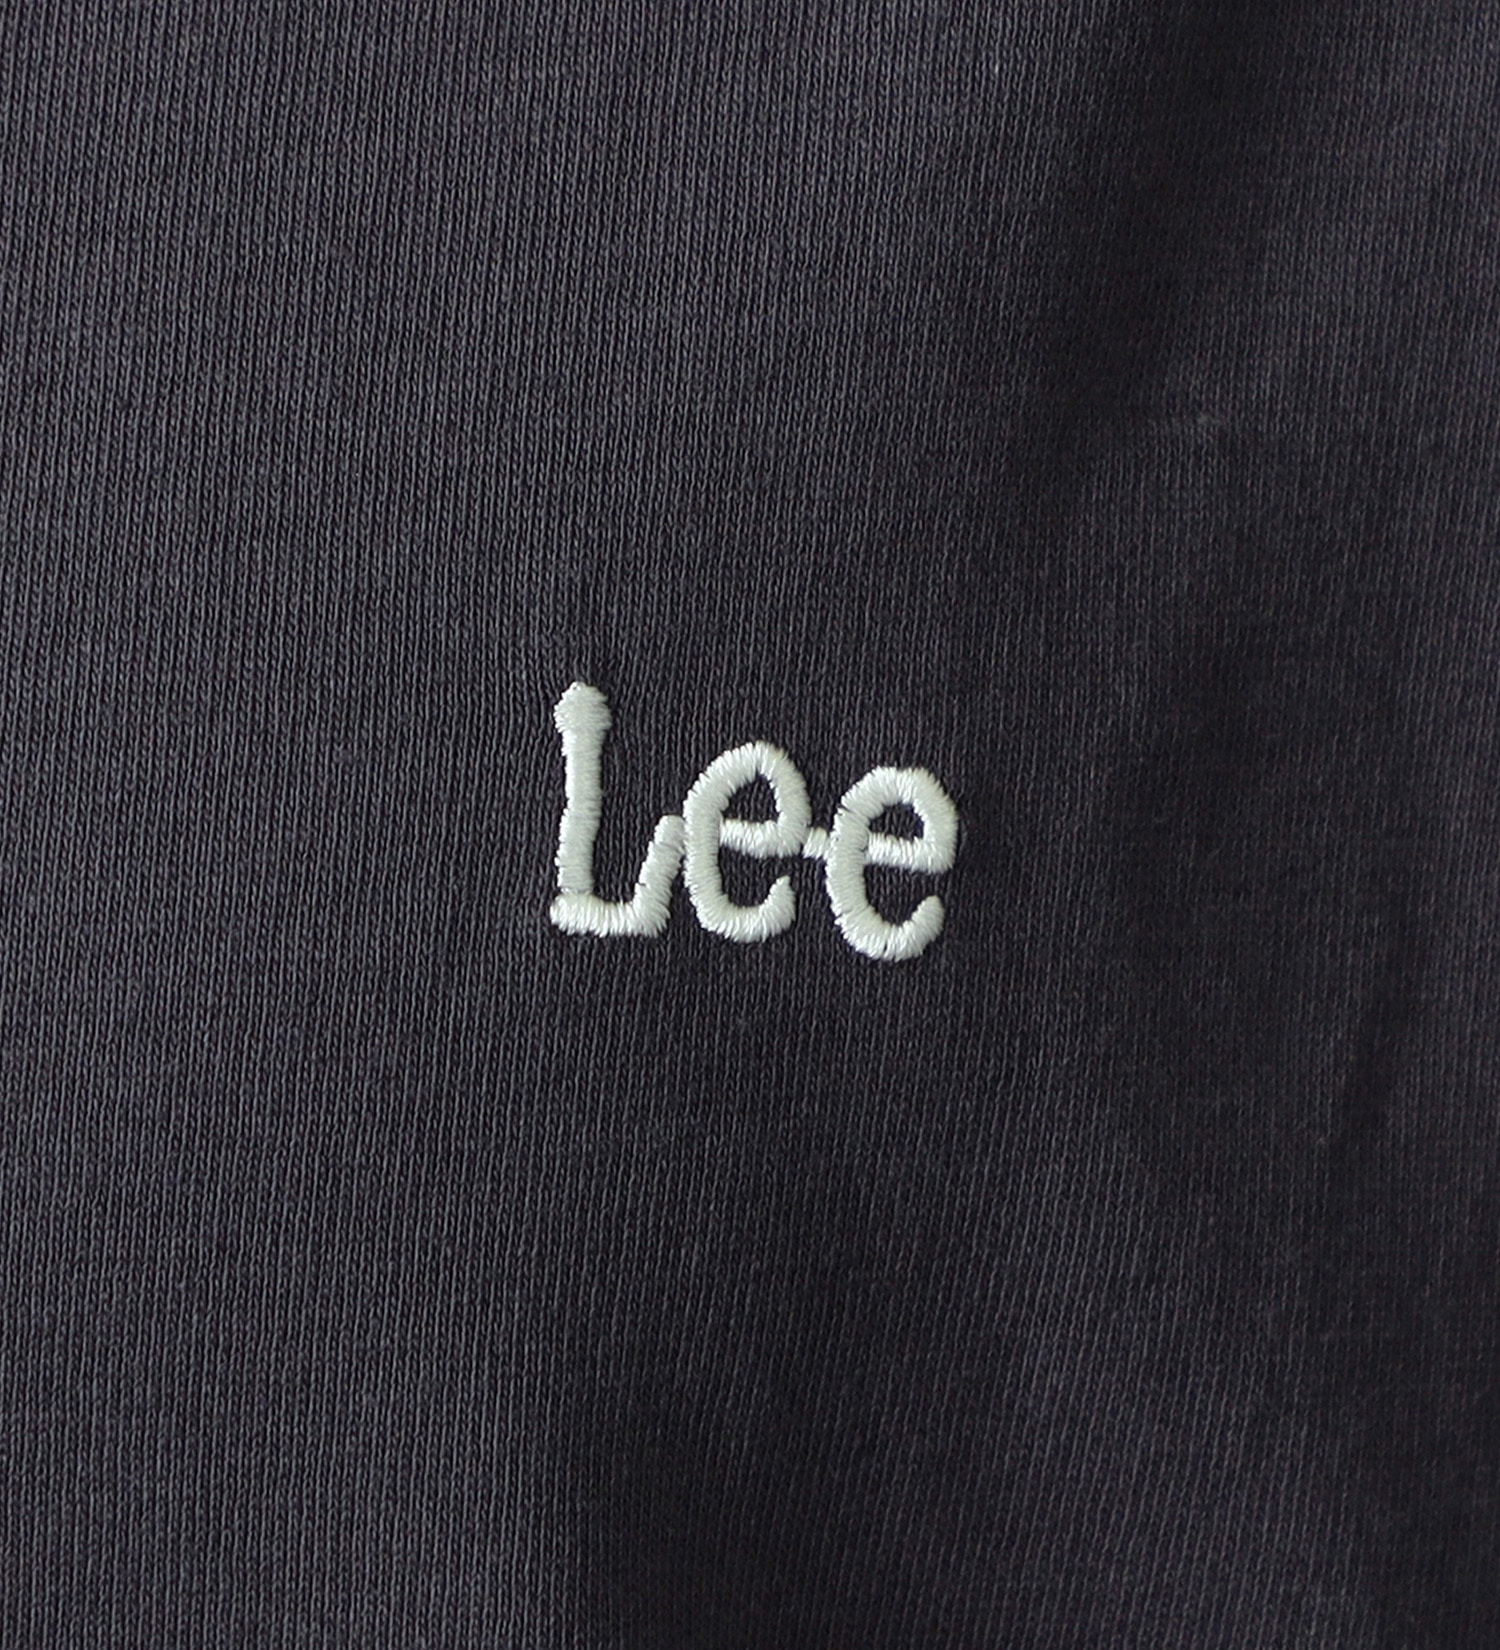 Lee(リー)の【GW SALE】スリーブレスTシャツ|トップス/Tシャツ/カットソー/レディース|チャコールグレー